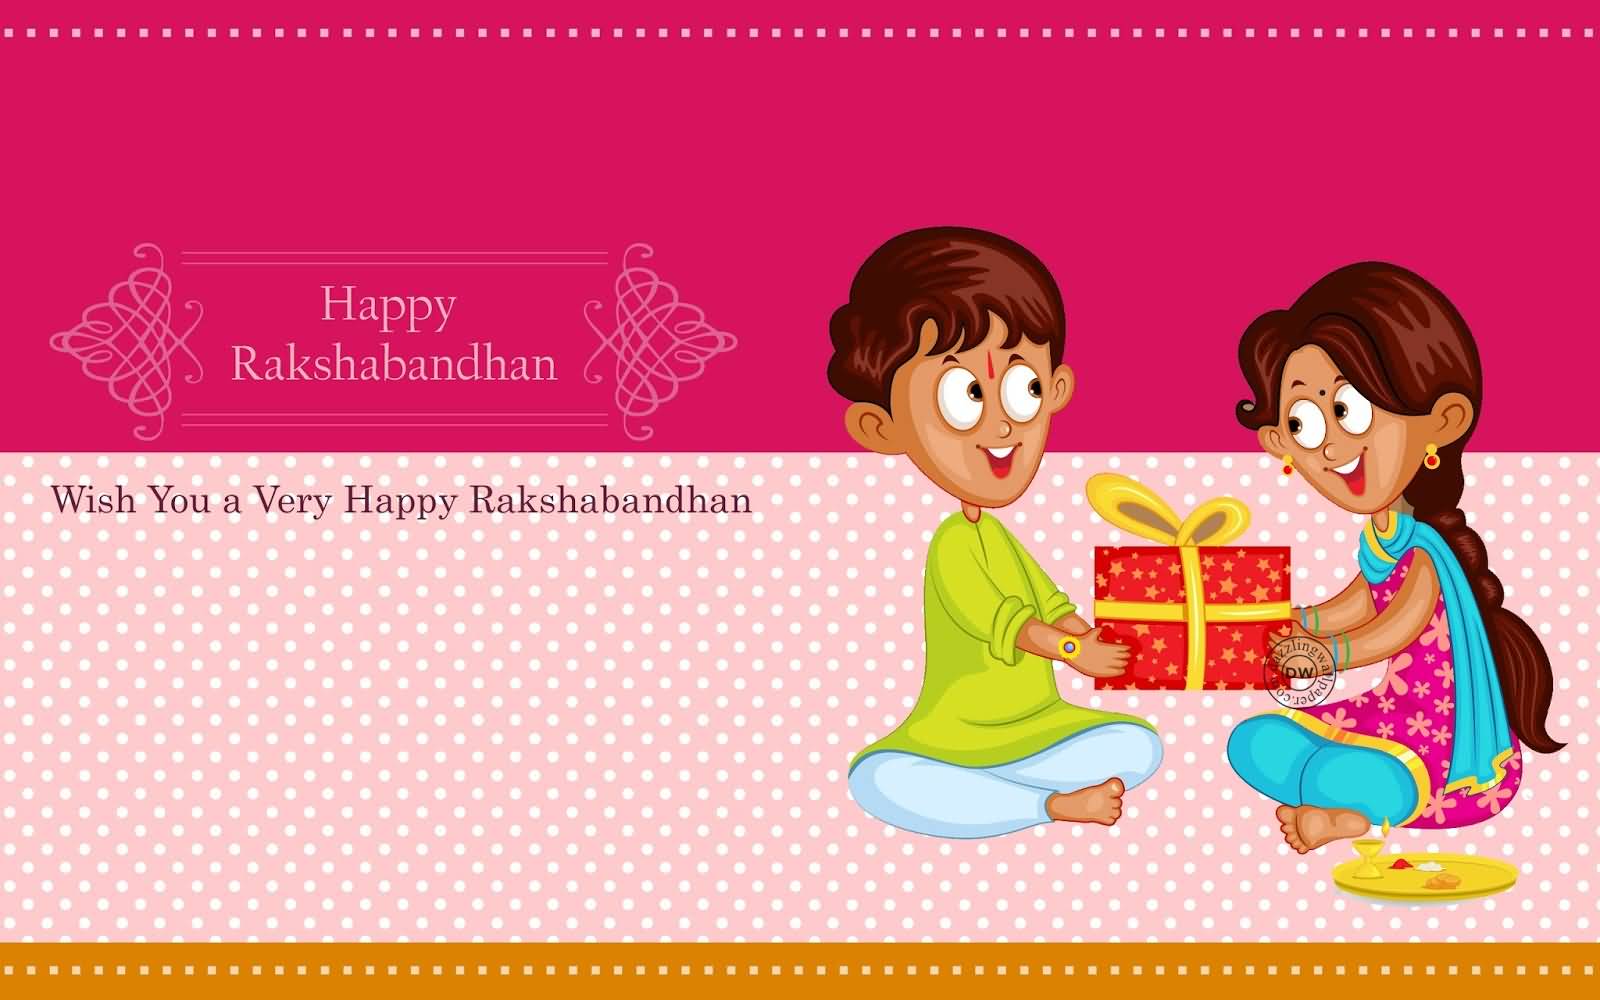 Happy Raksha Bandhan Wish You A Very Happy Raksha Bandhan Brother Presenting Gift To Sister